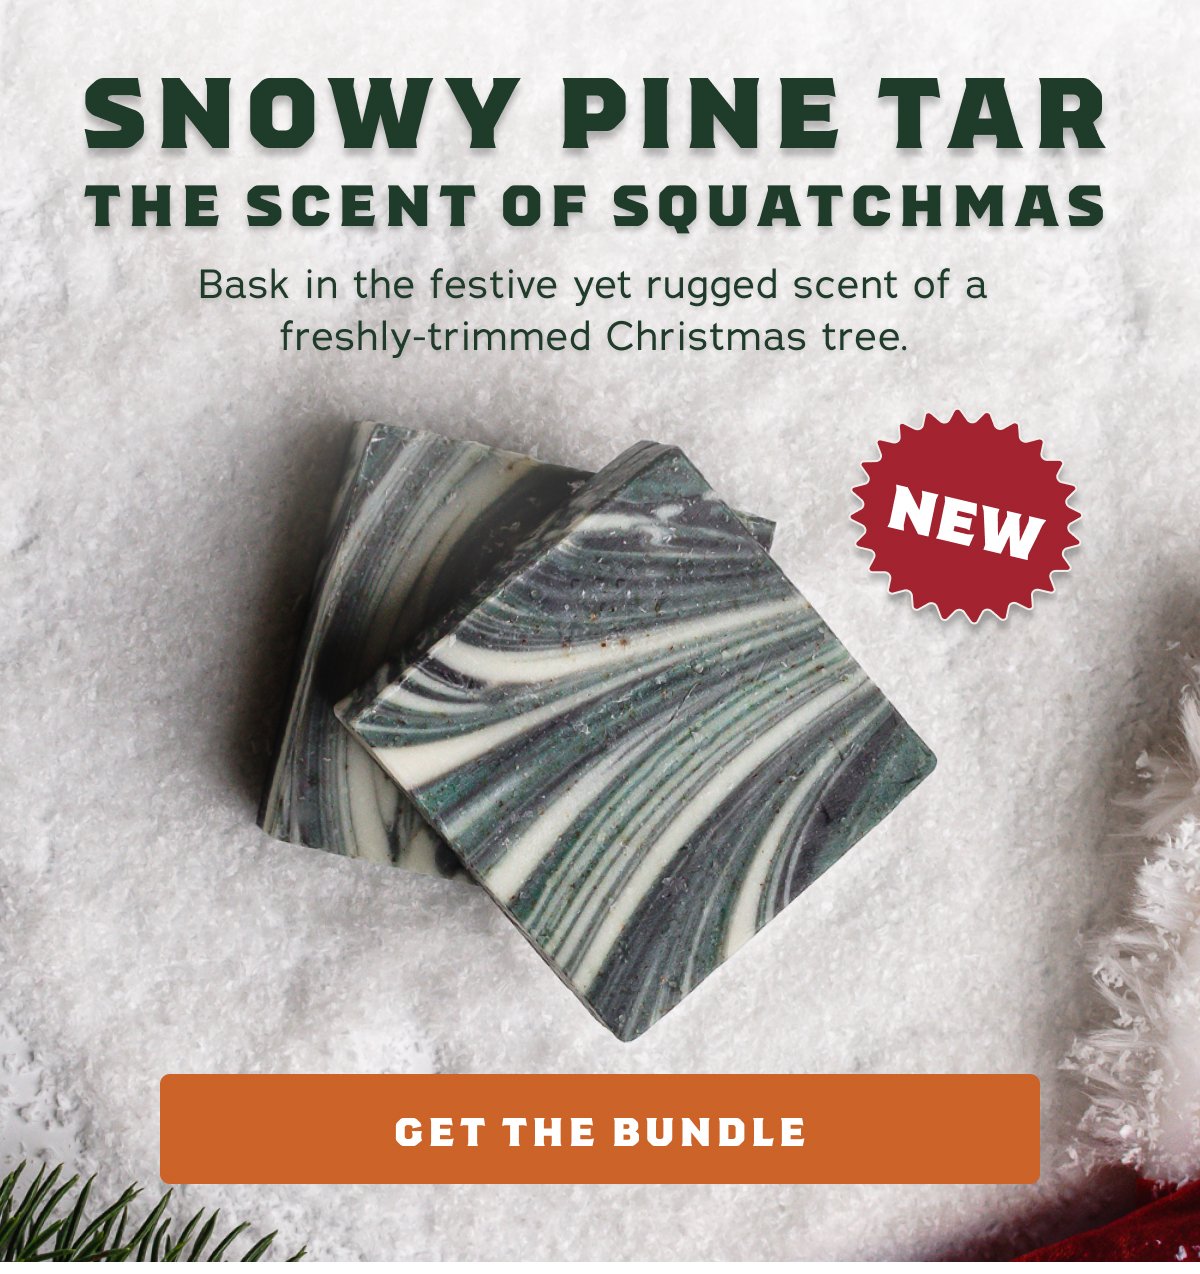 Dr. Squatch Holiday Limited Edition Soap - Snowy Pine Tar Bricc